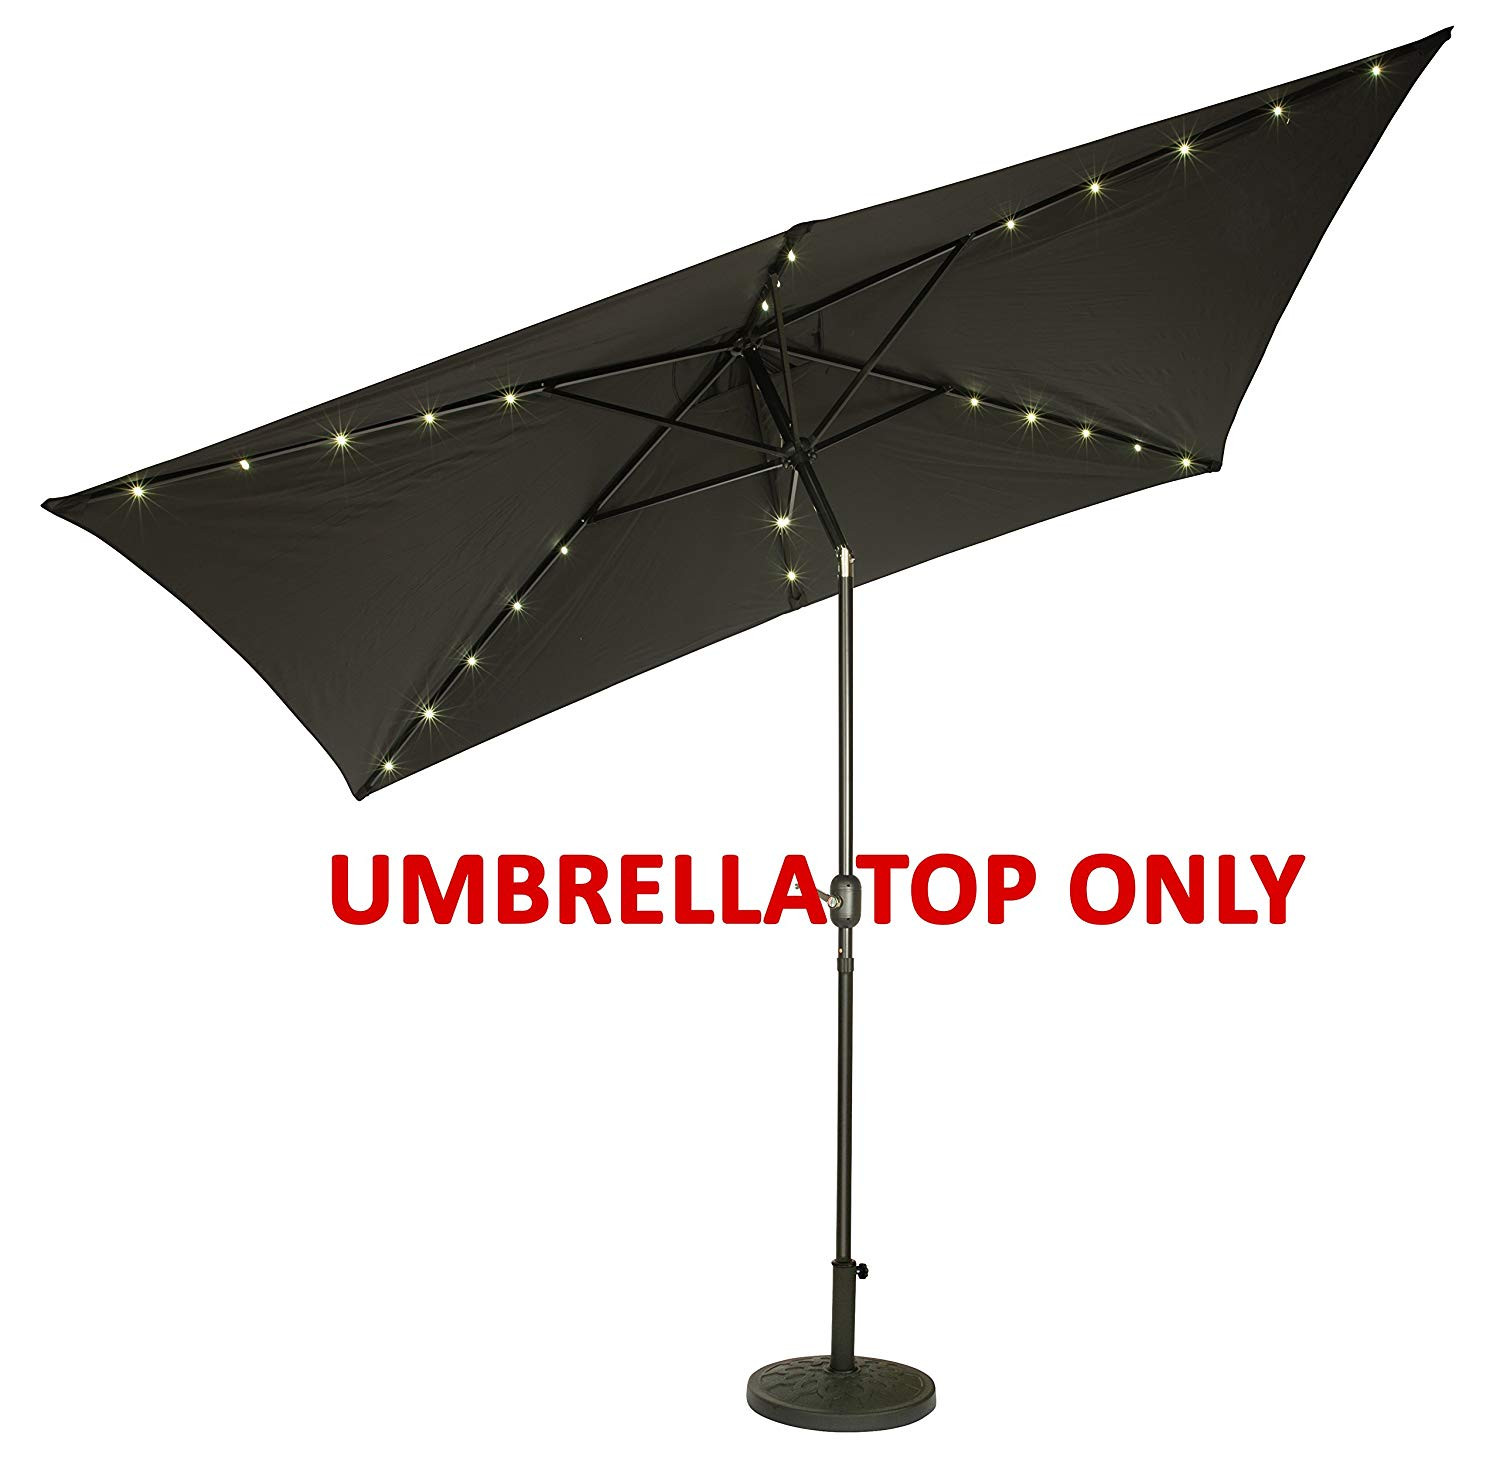 Best ideas about Rectangular Patio Umbrella
. Save or Pin Replacement Patio Umbrella Top for 10 x 6 5 Rectangular Now.